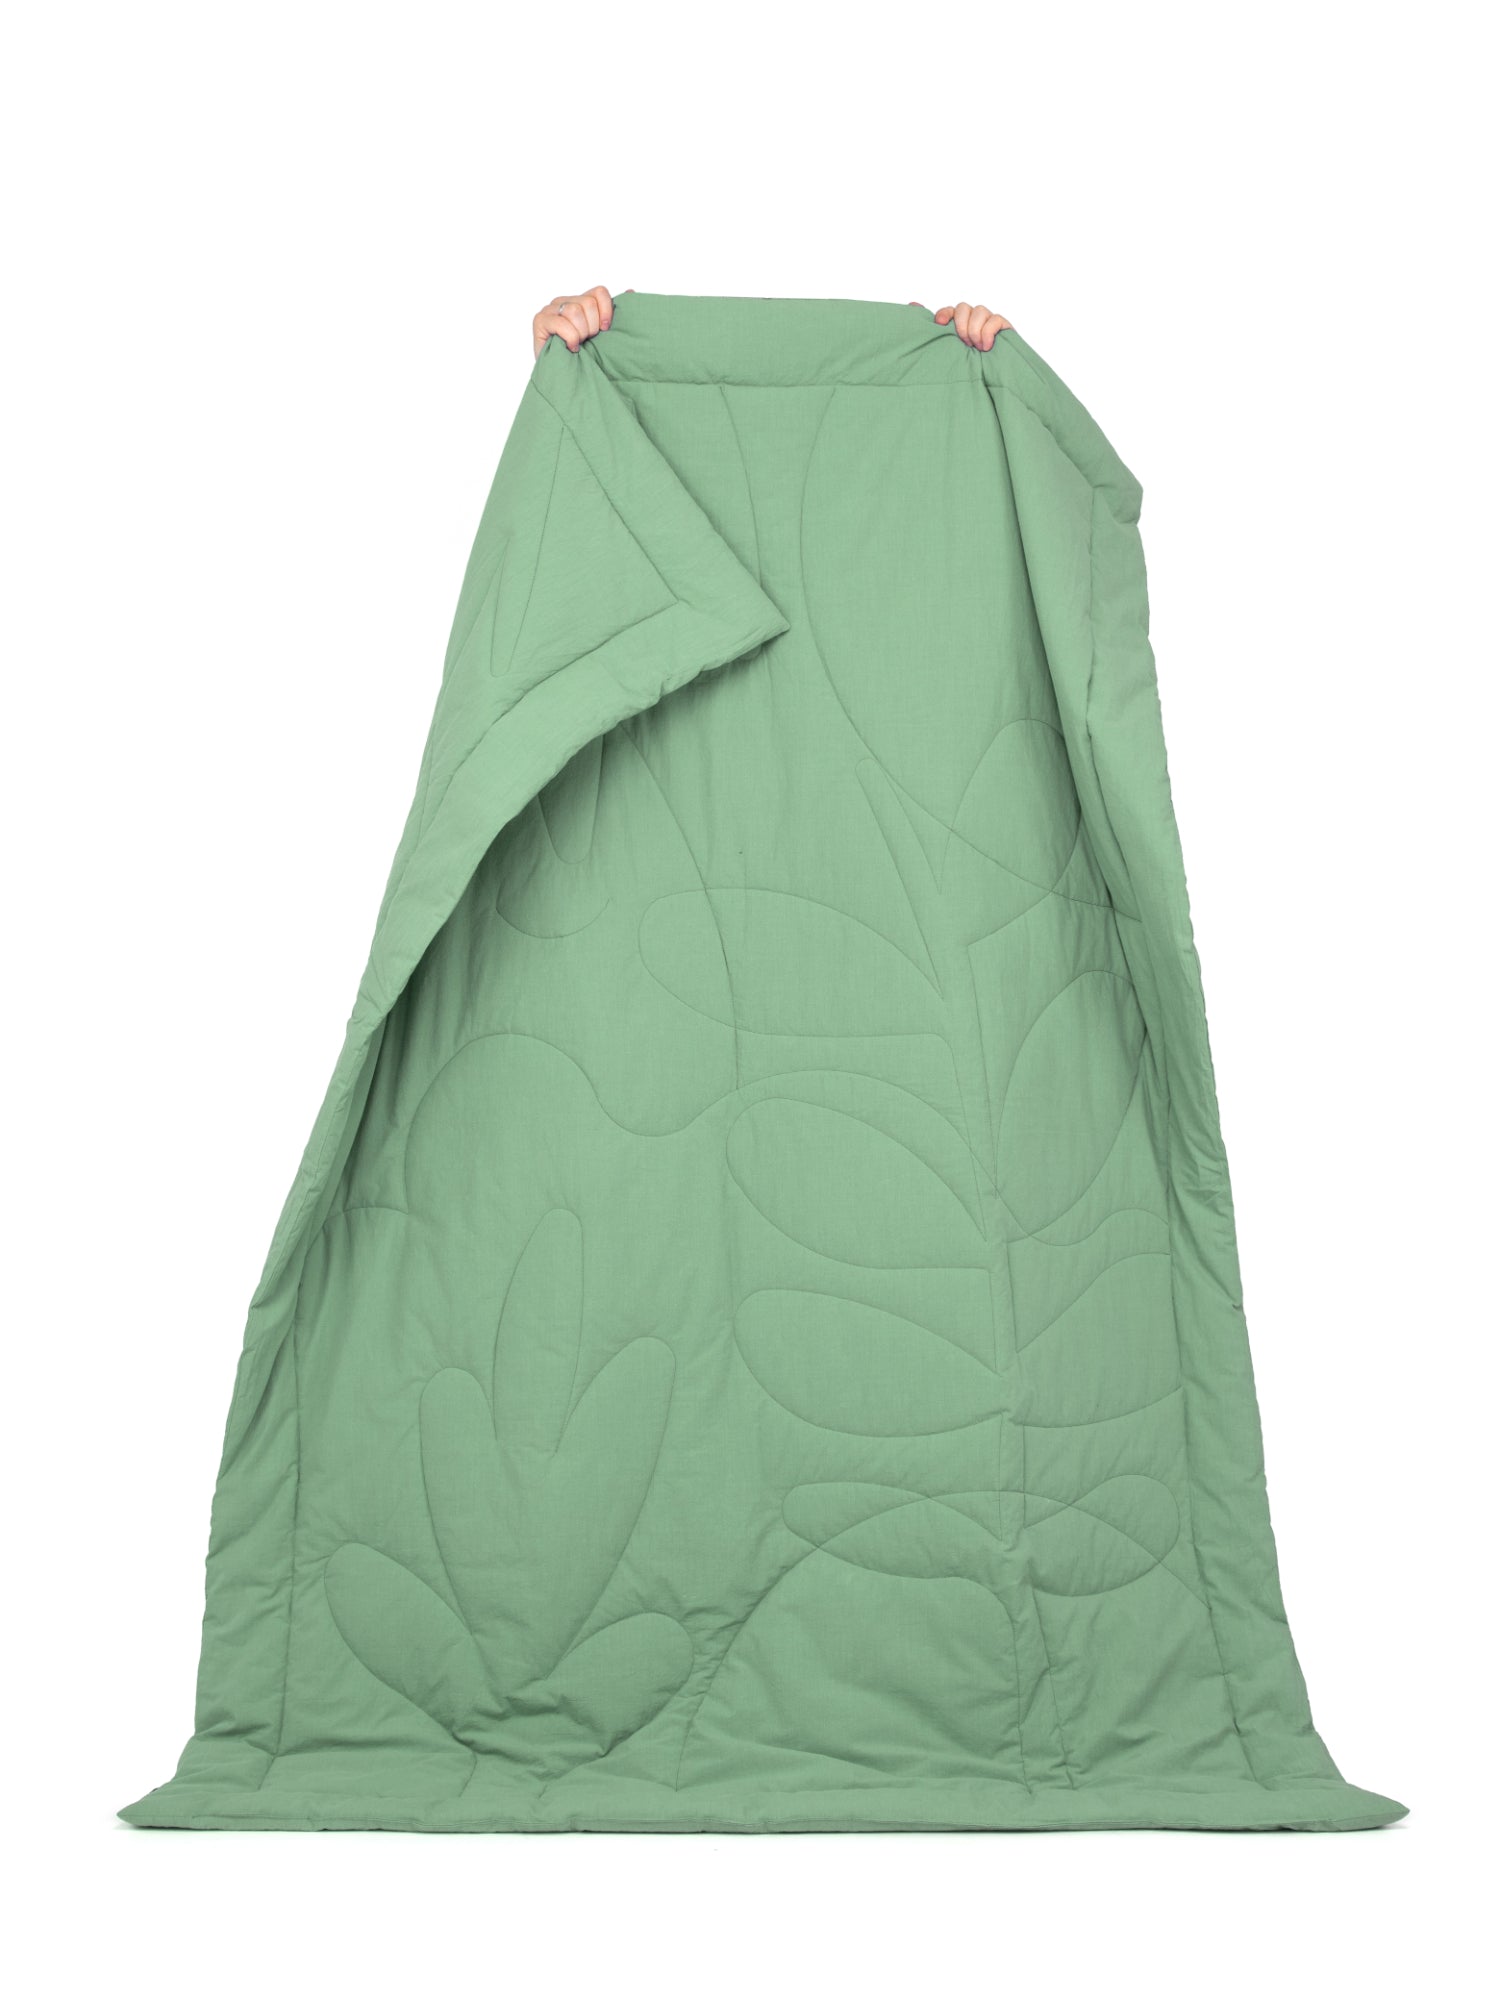 Yura Blanket 1.5 Green